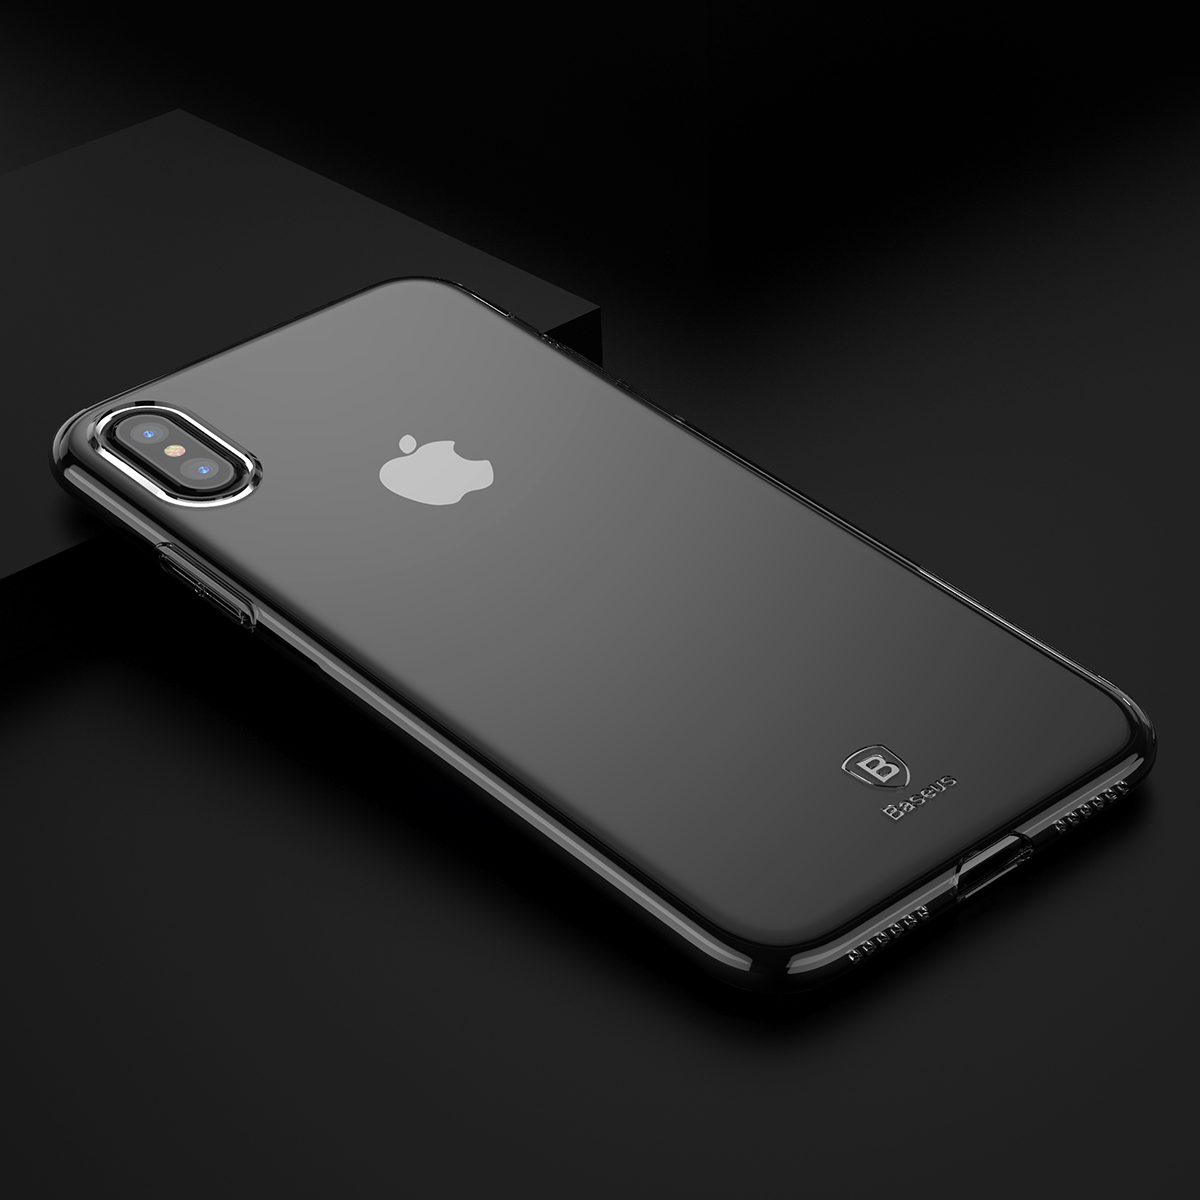 Чехол Baseus Simplicity Series Transparent Black для iPhone XS Max